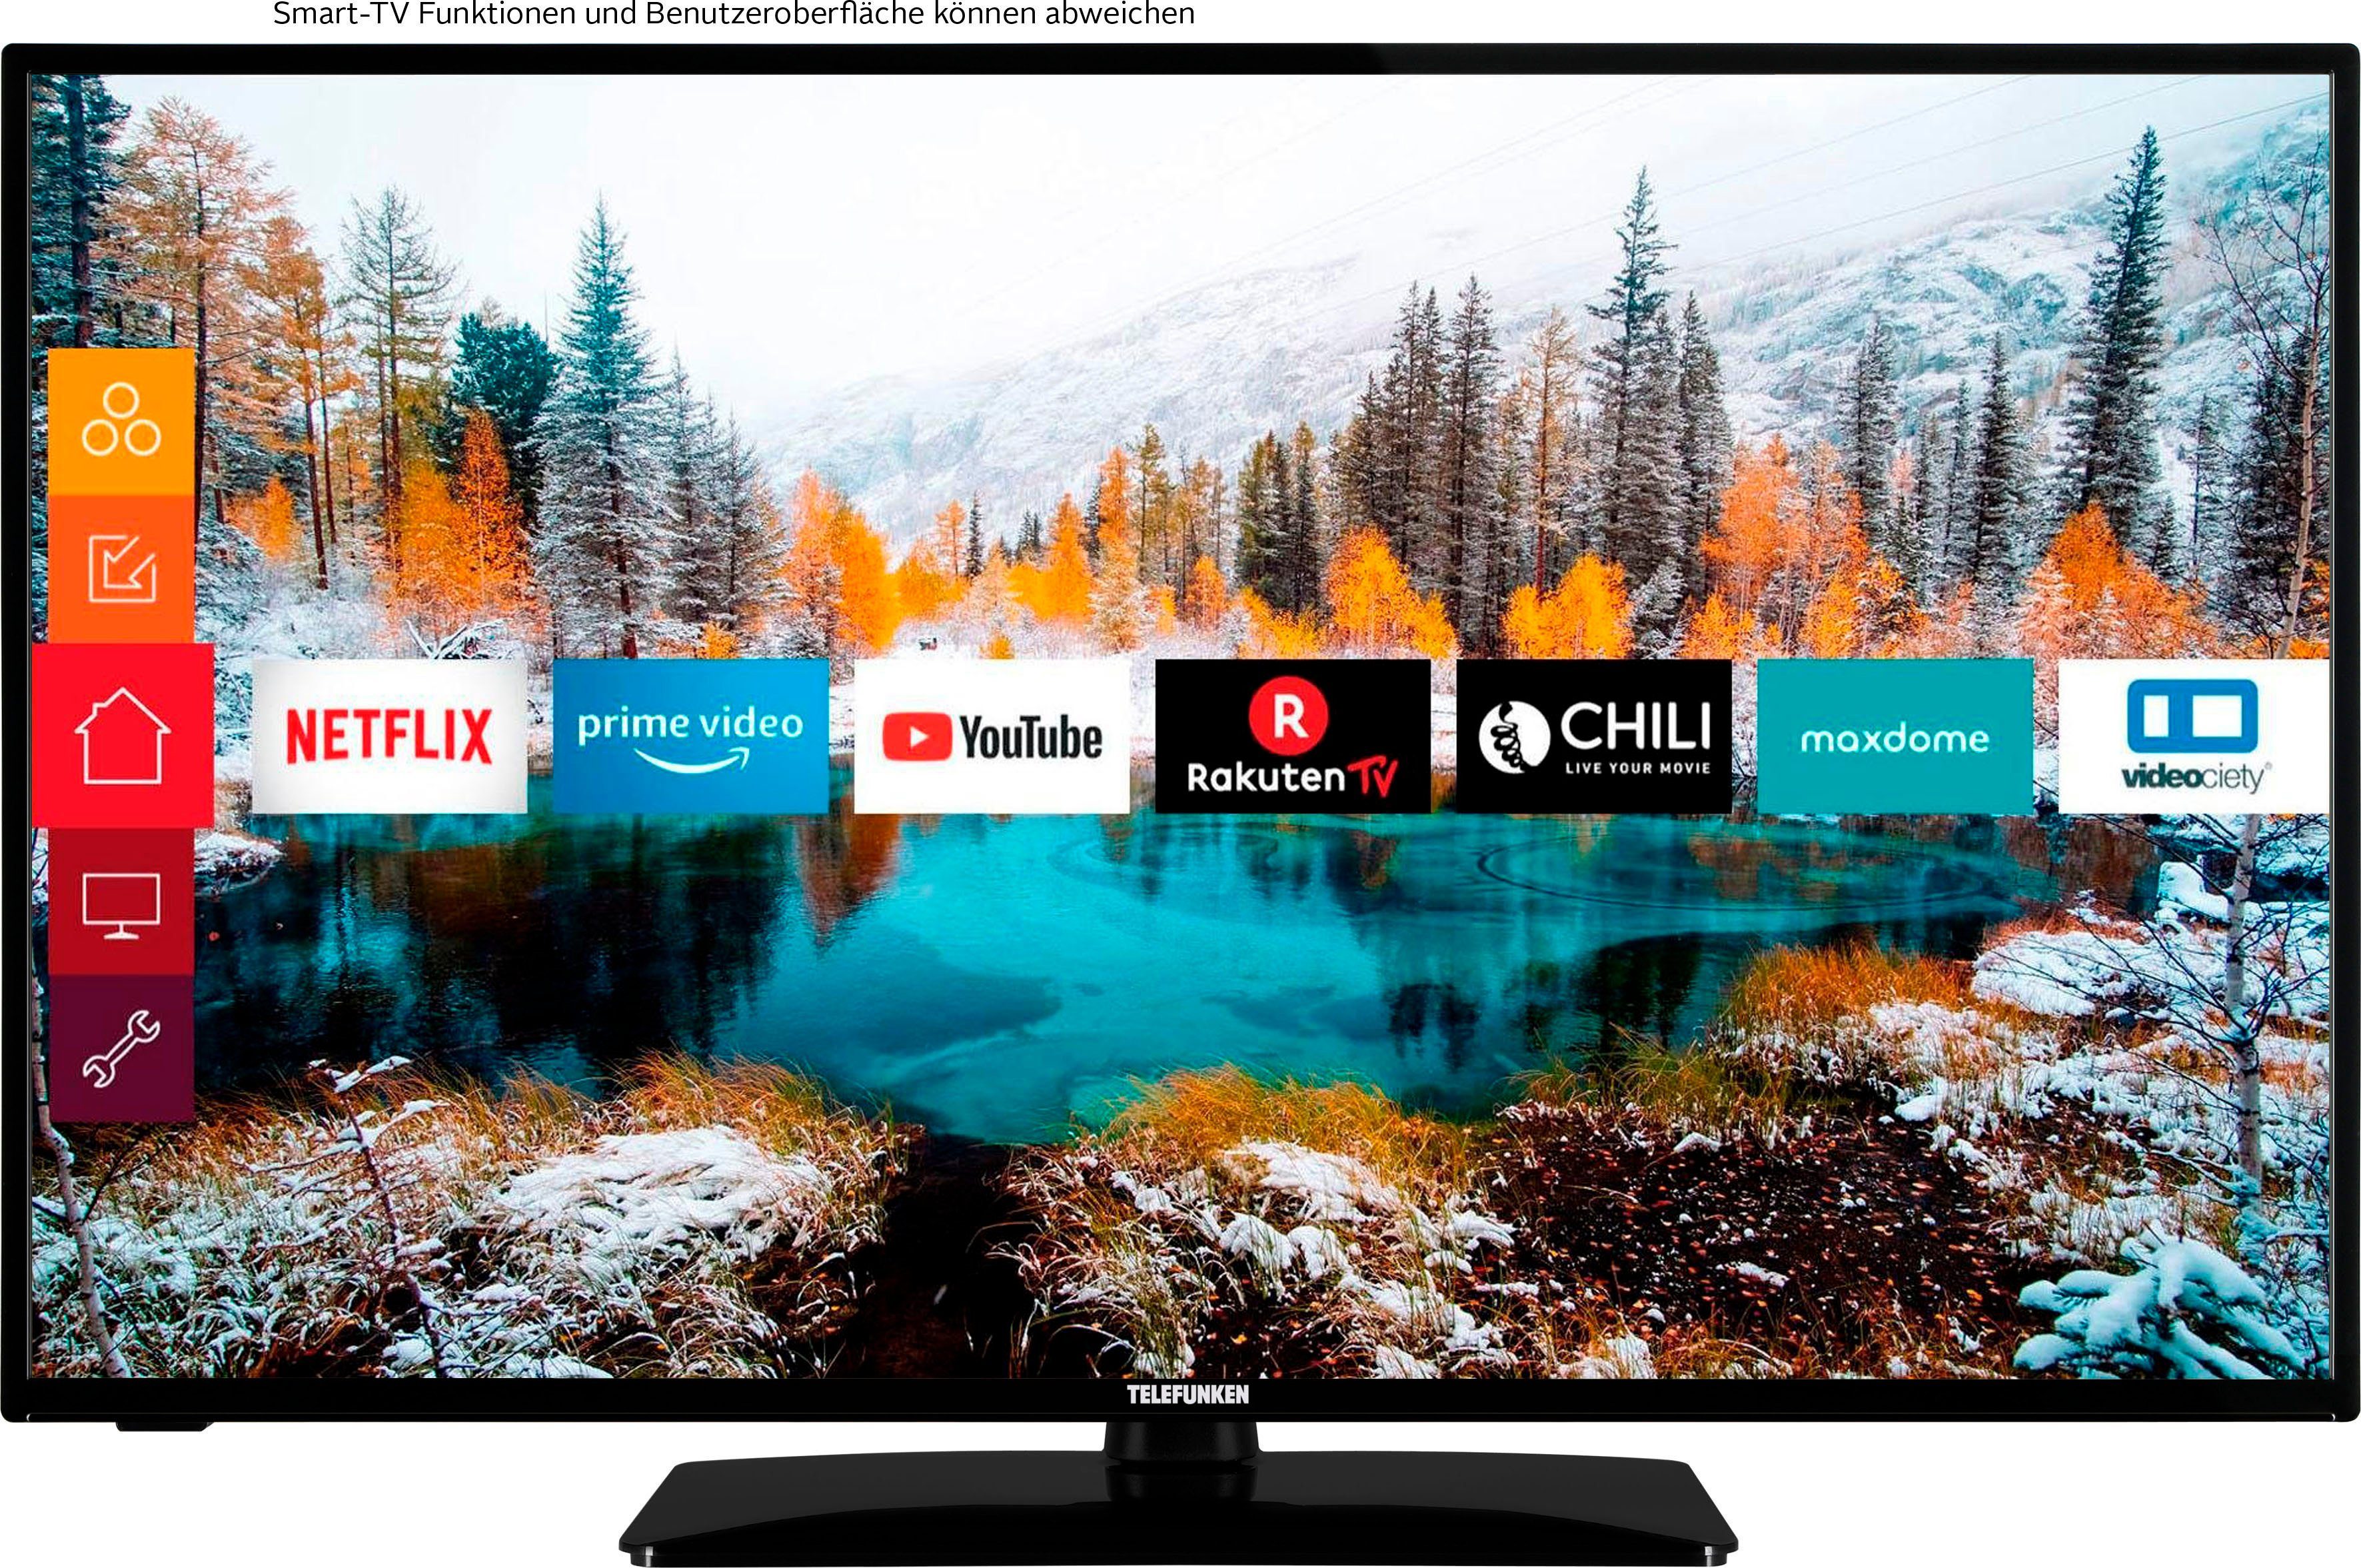 Telefunken D42F553X1CW LCD-LED Fernseher (106 cm/42 Zoll, Full HD, Smart TV,  HDR10, Triple-Tuner, Works with Alexa & Google Assistant, Bluetooth,  Netflix / Prime Video / Youtube uvm. - 6 Monate HD+ inkl)